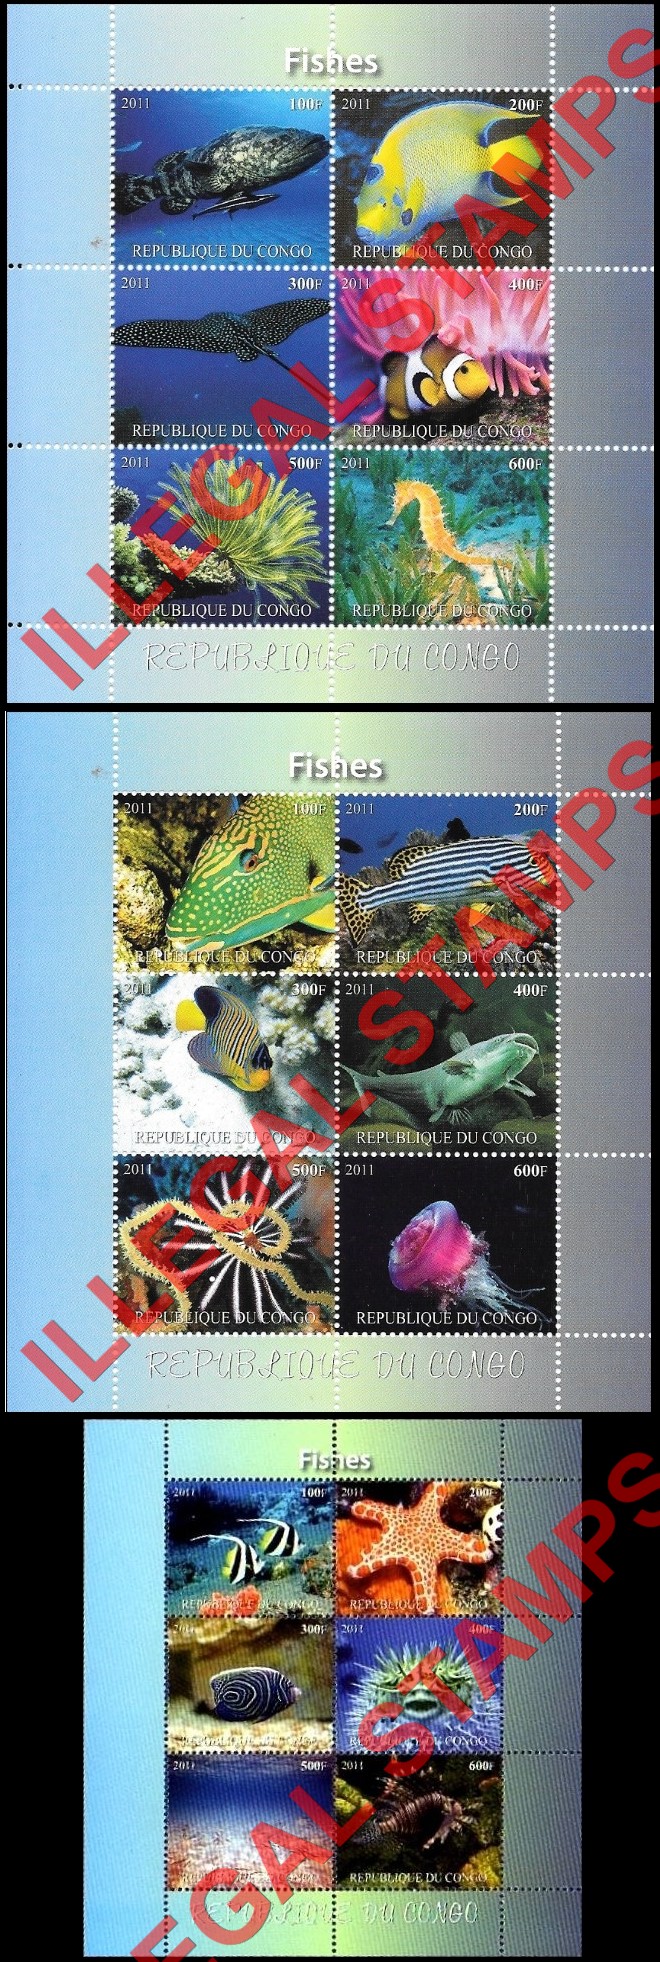 Congo Republic 2011 Fish Illegal Stamp Souvenir Sheets of 6